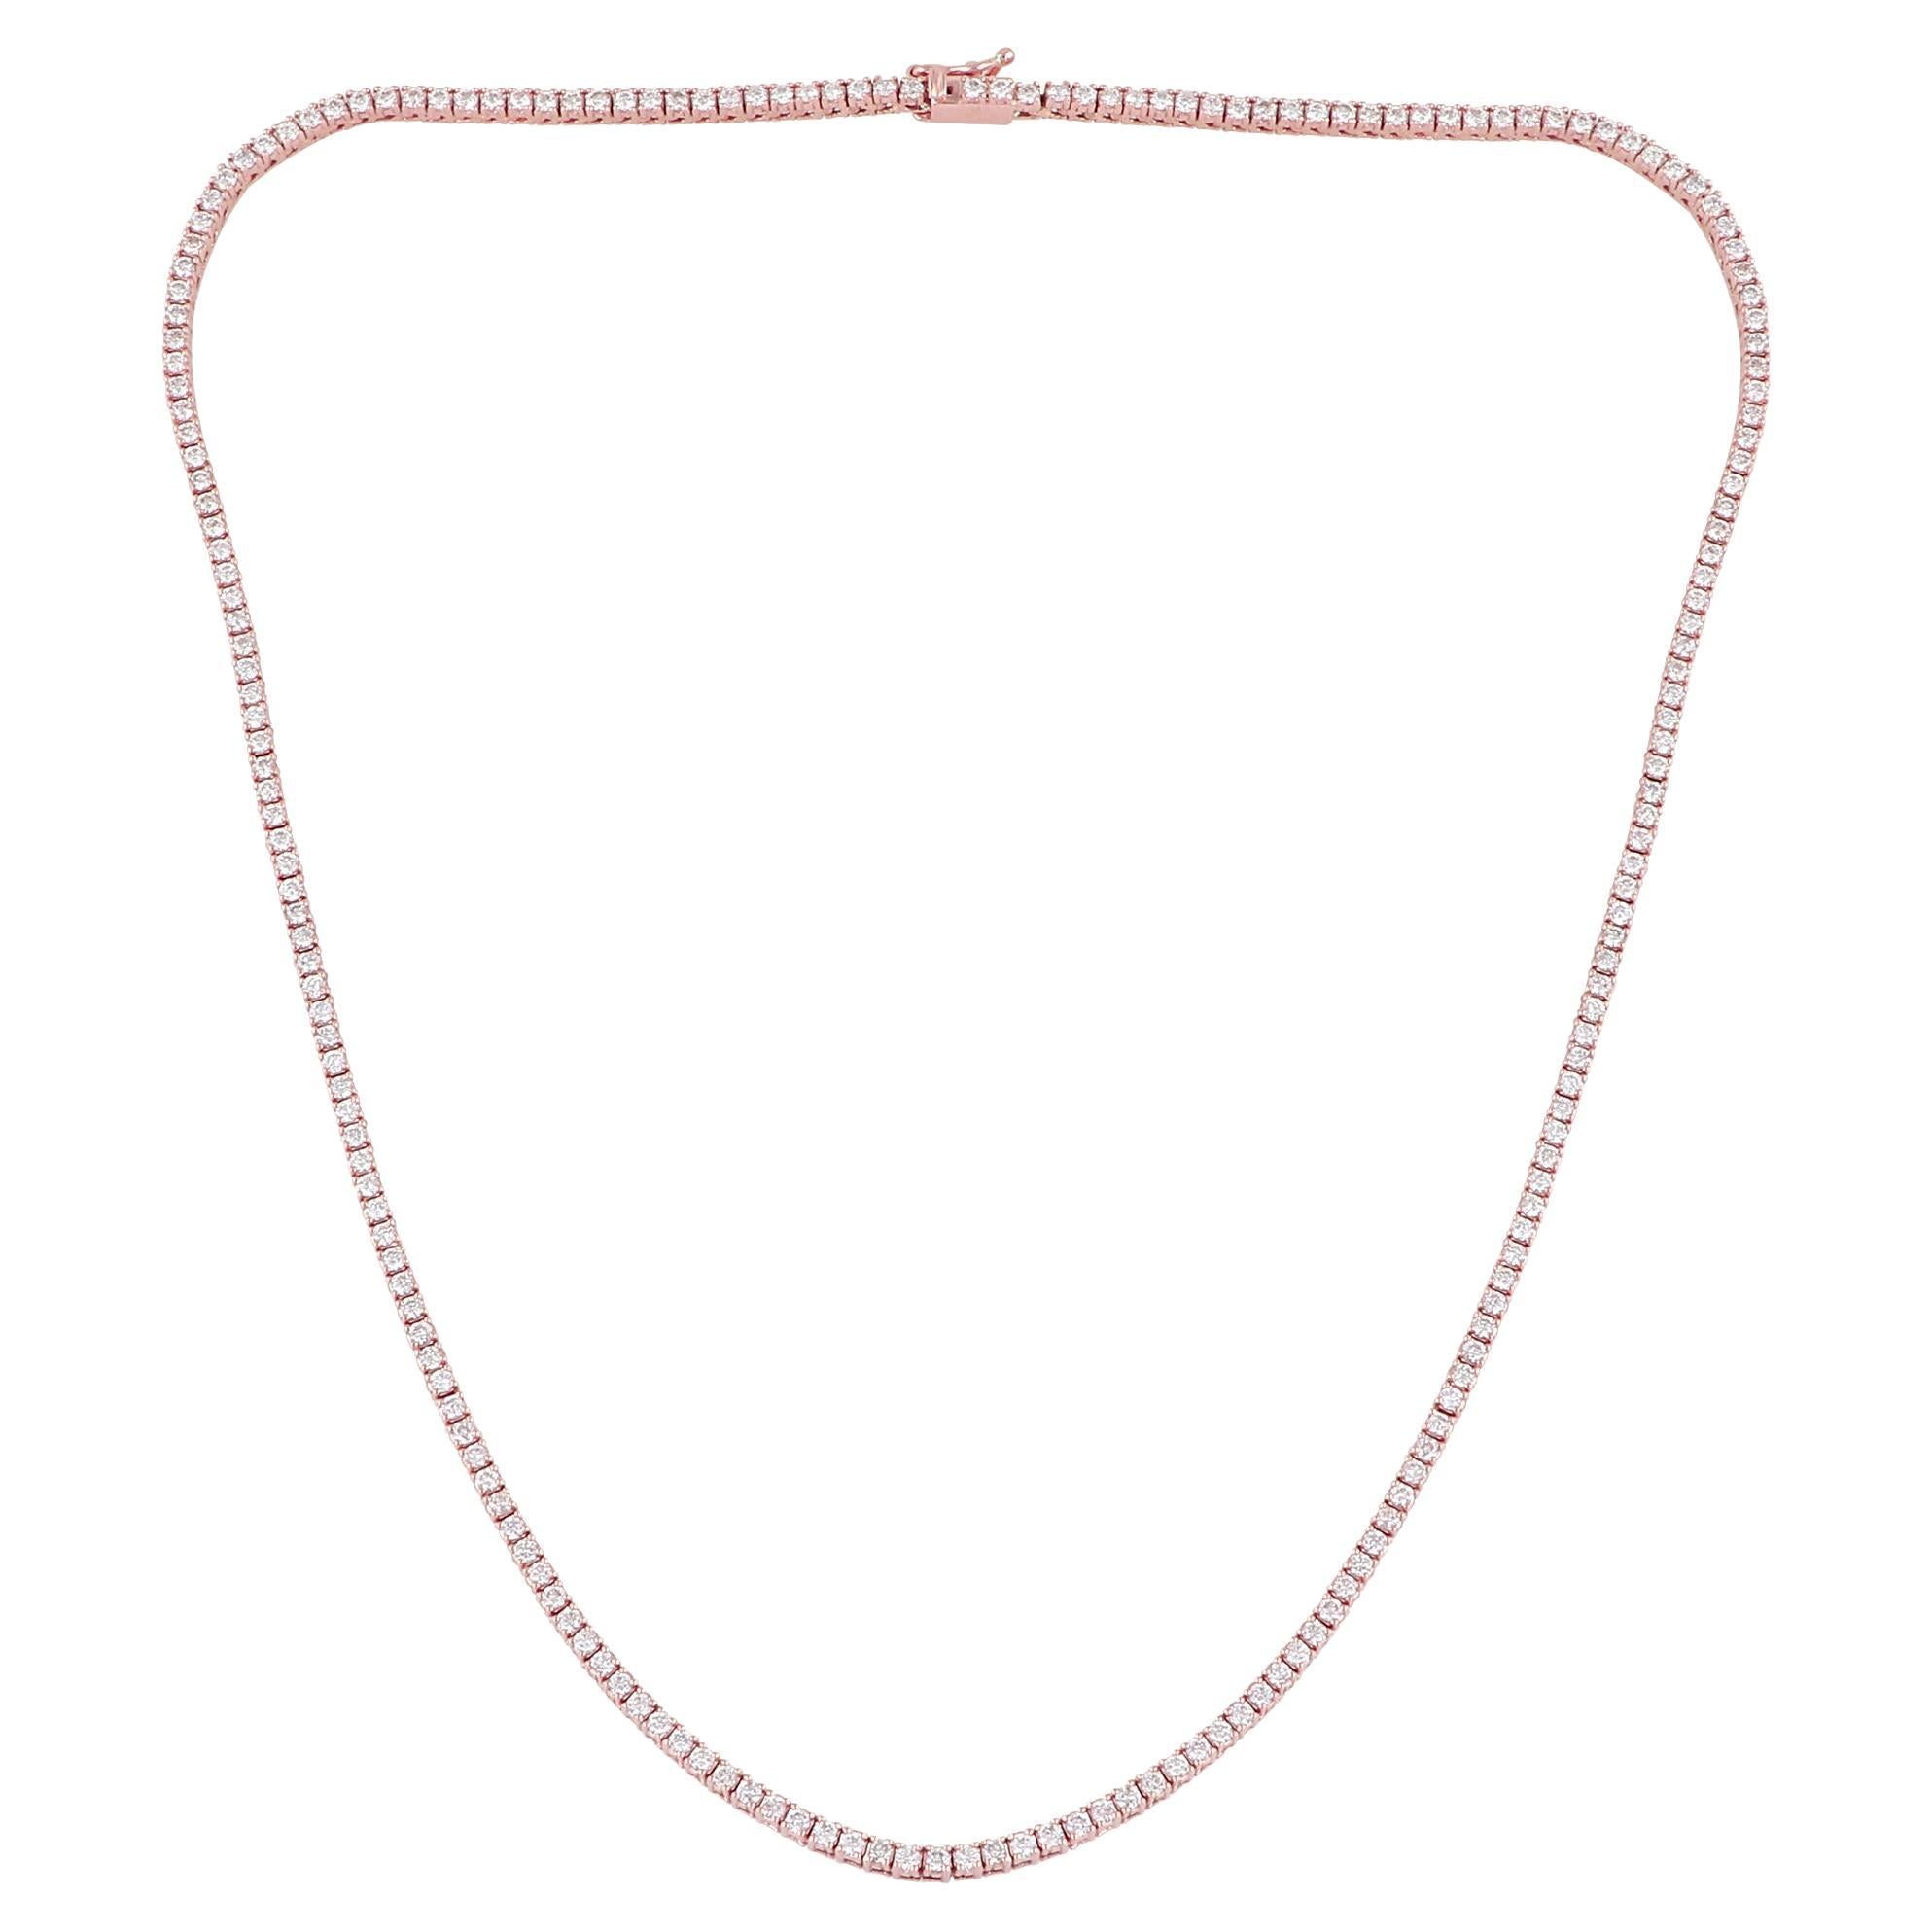 3.60 Carat SI Clarity HI Color Diamond Chain Necklace 14 Karat Rose Gold Jewelry